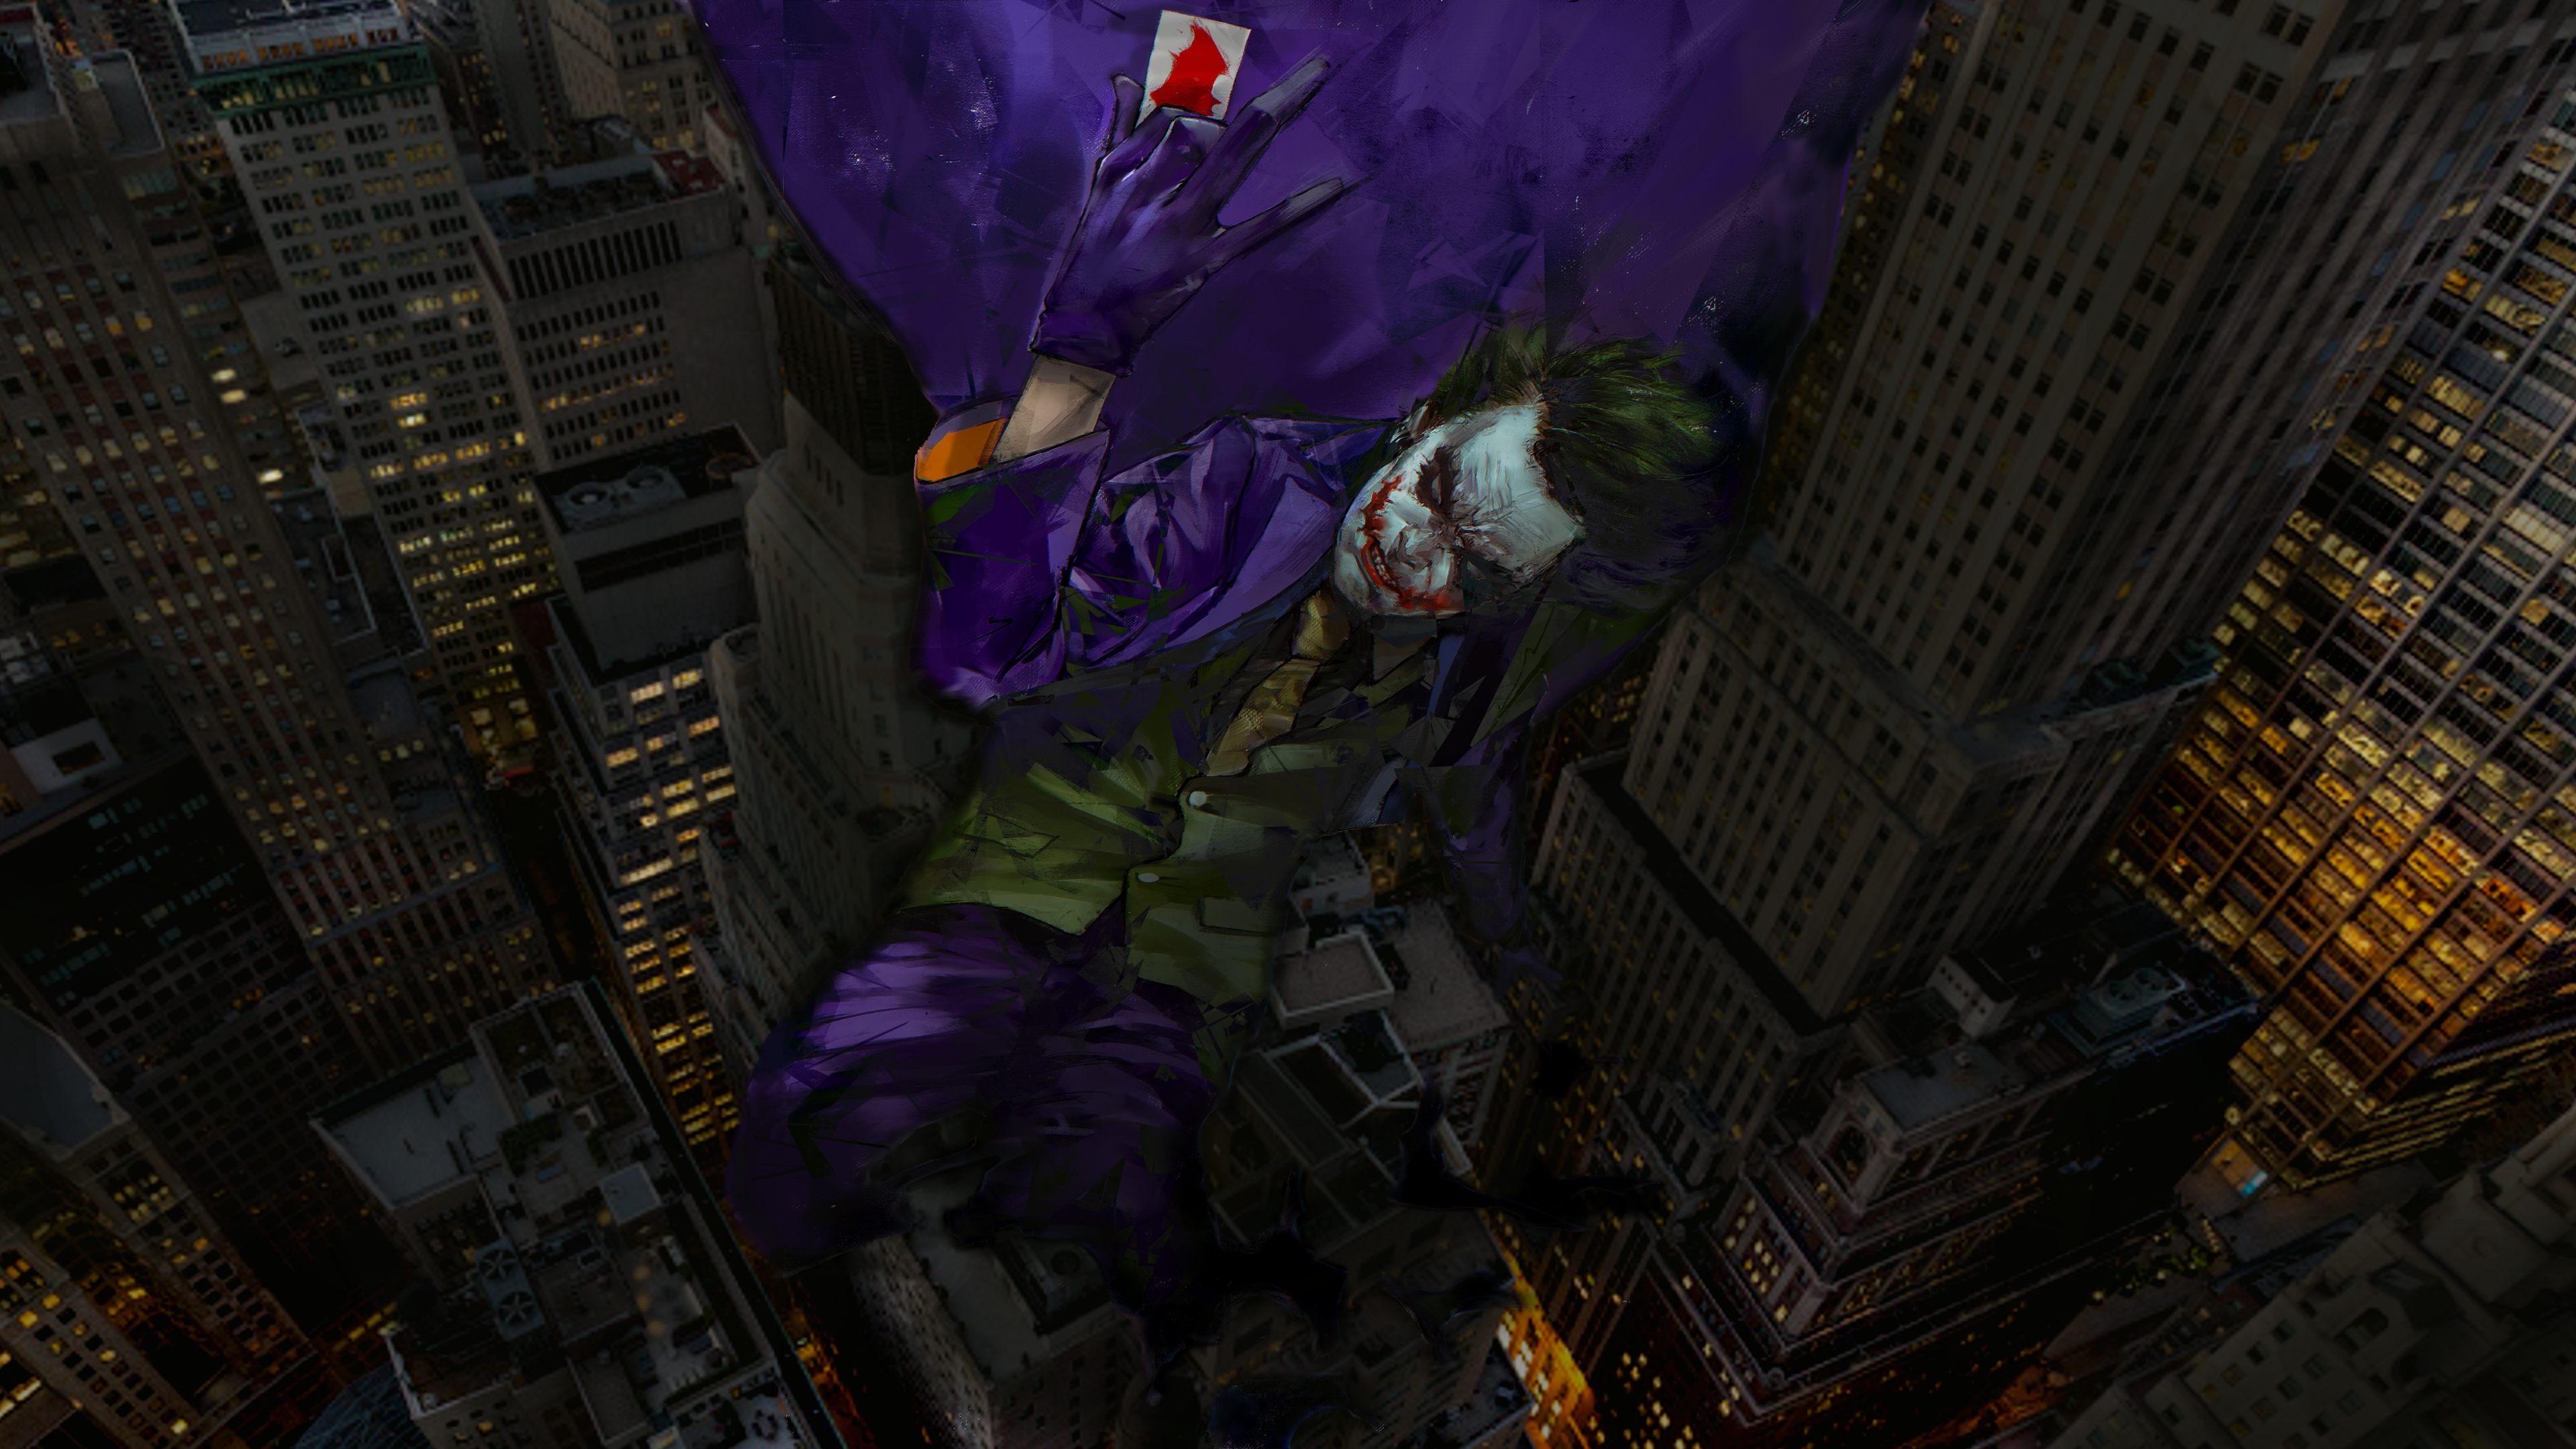 Digital Art Artwork Batman Dark Knight Trilogy Comics Night City Urban Cityscape Flying Movies Joker 3840x2160